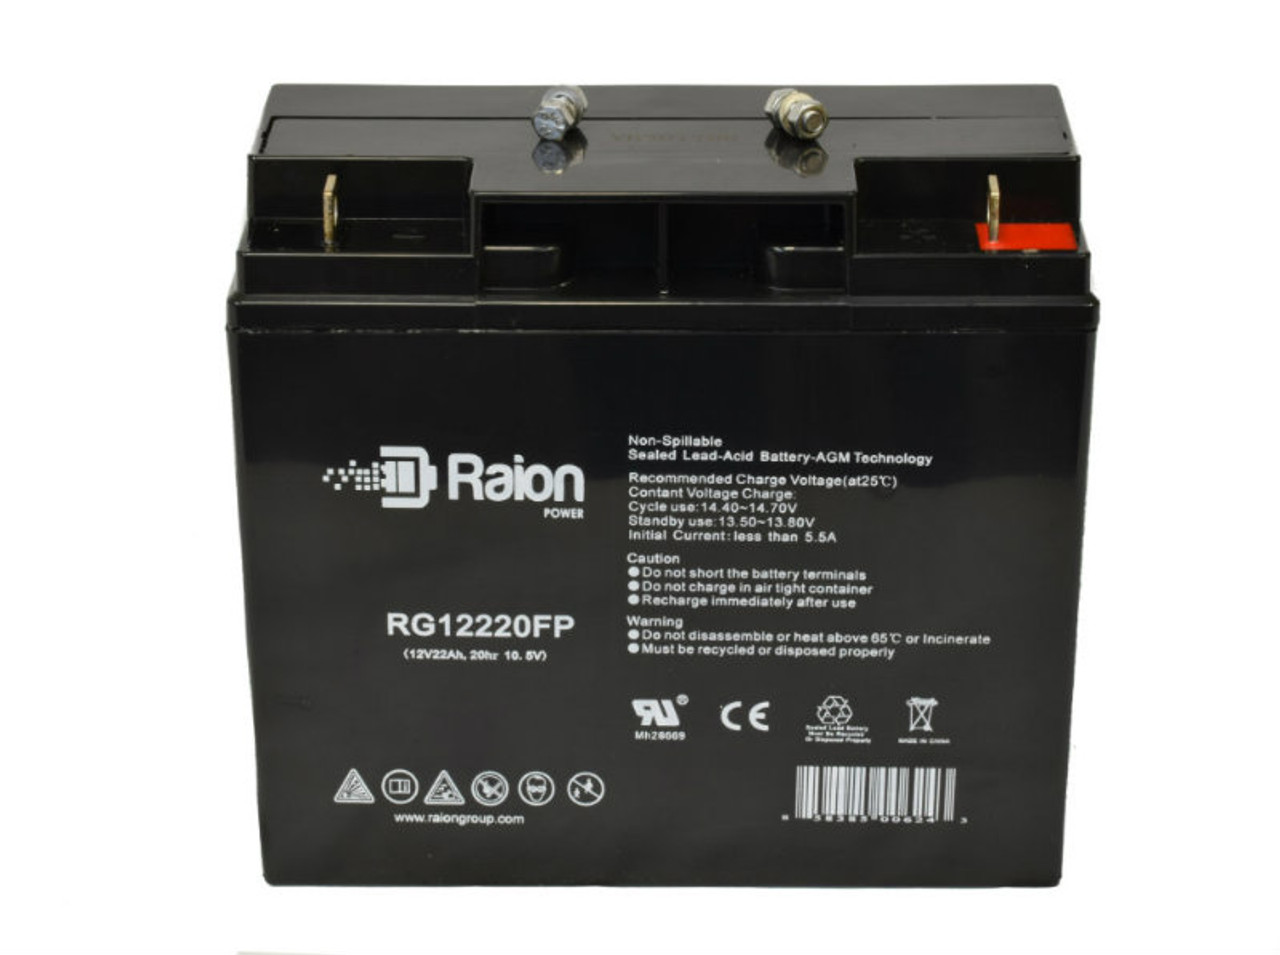 Raion Power RG12220FP 12V 22Ah AGM Battery for Xantrex Technology Powersource 1800 Jump Starter